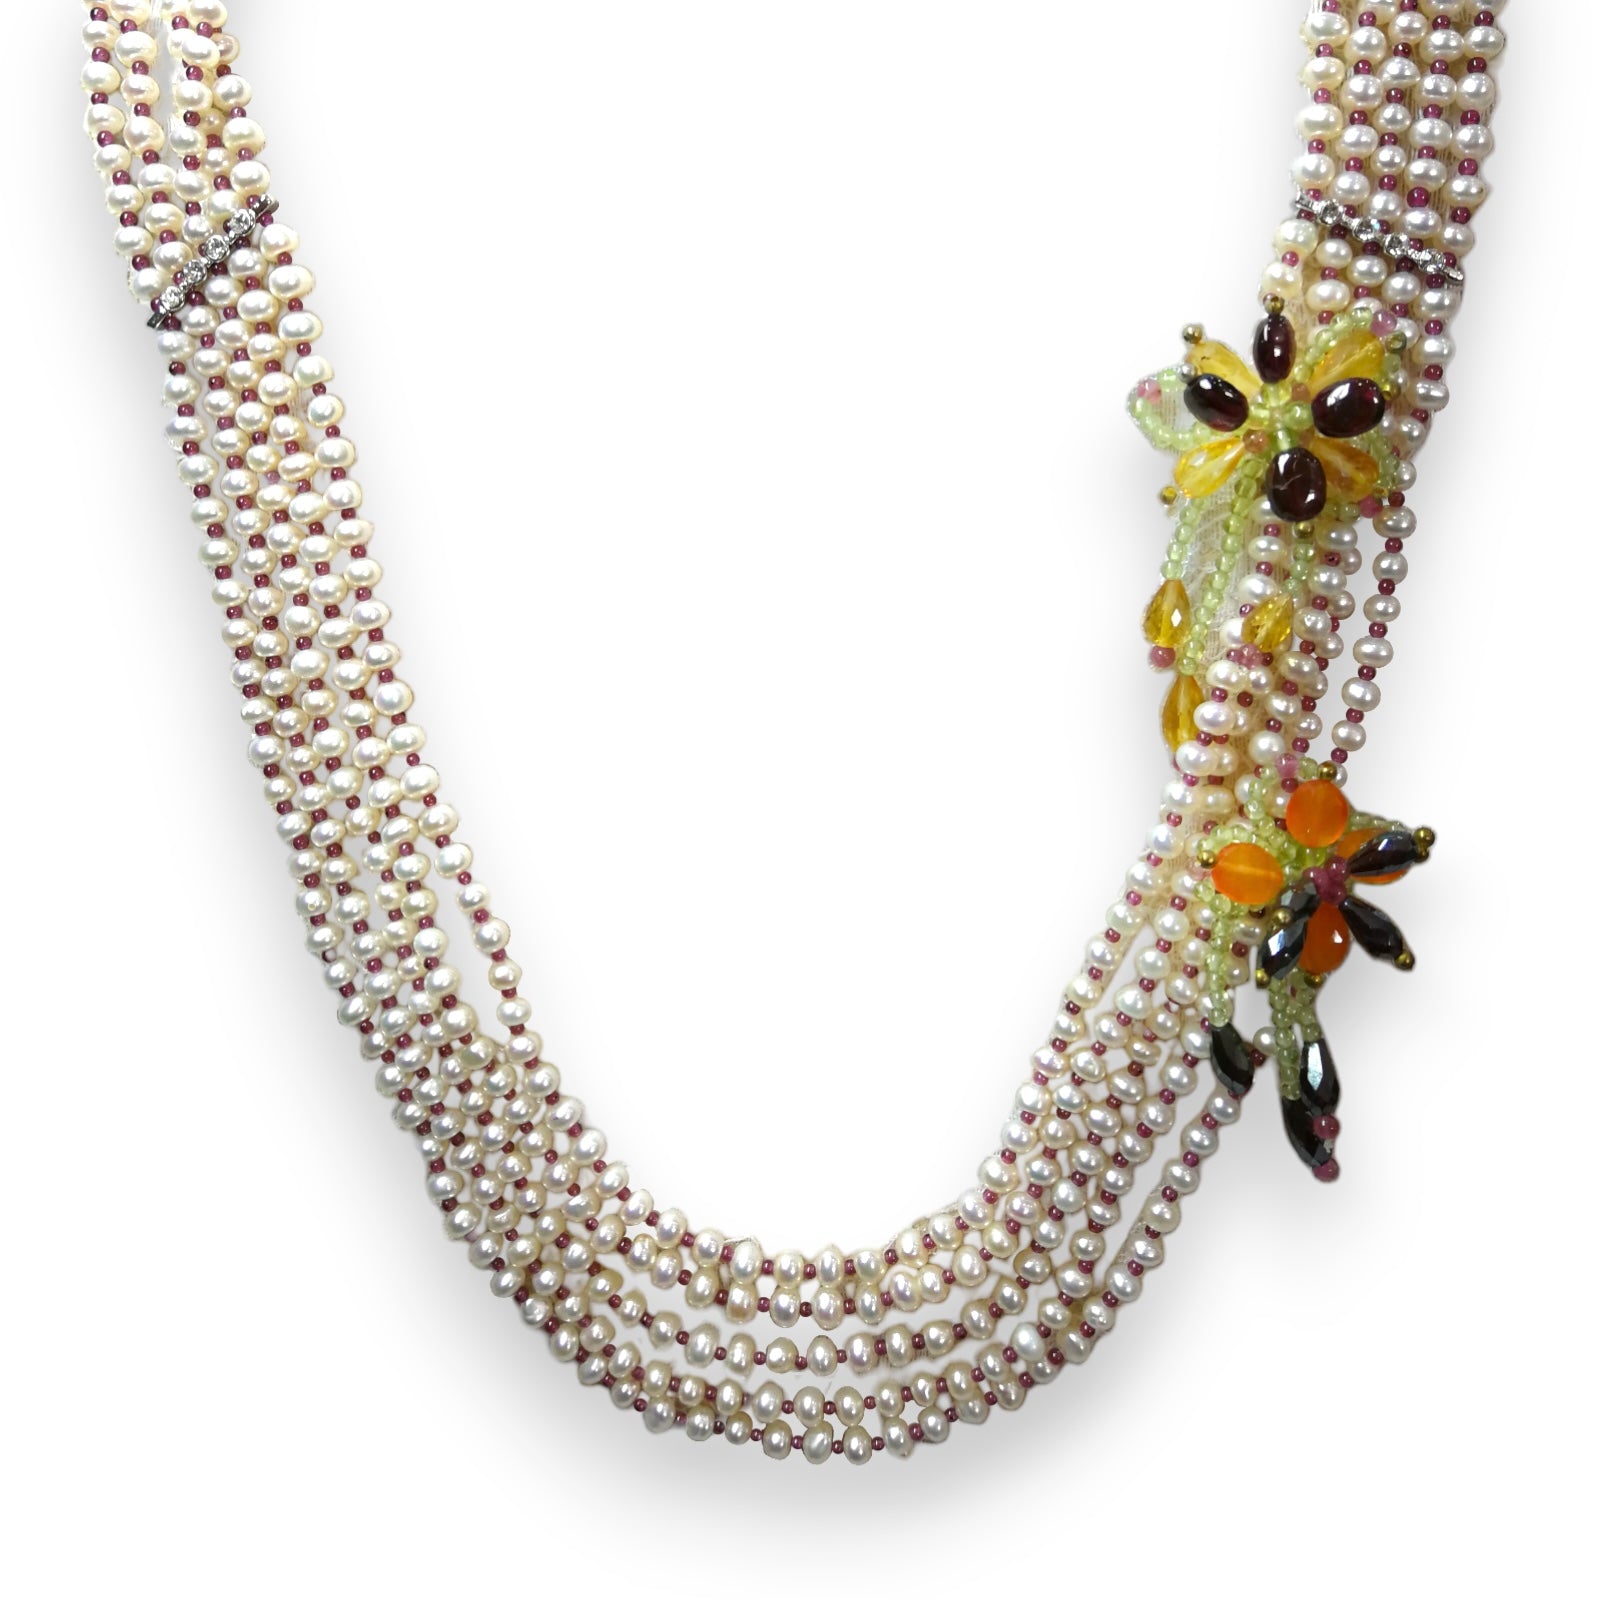 Natural Handmade Necklace 16"-18" Pearls, Peridot, Citrine, Carnelian, Garnet Gemstone Beads Jewellery